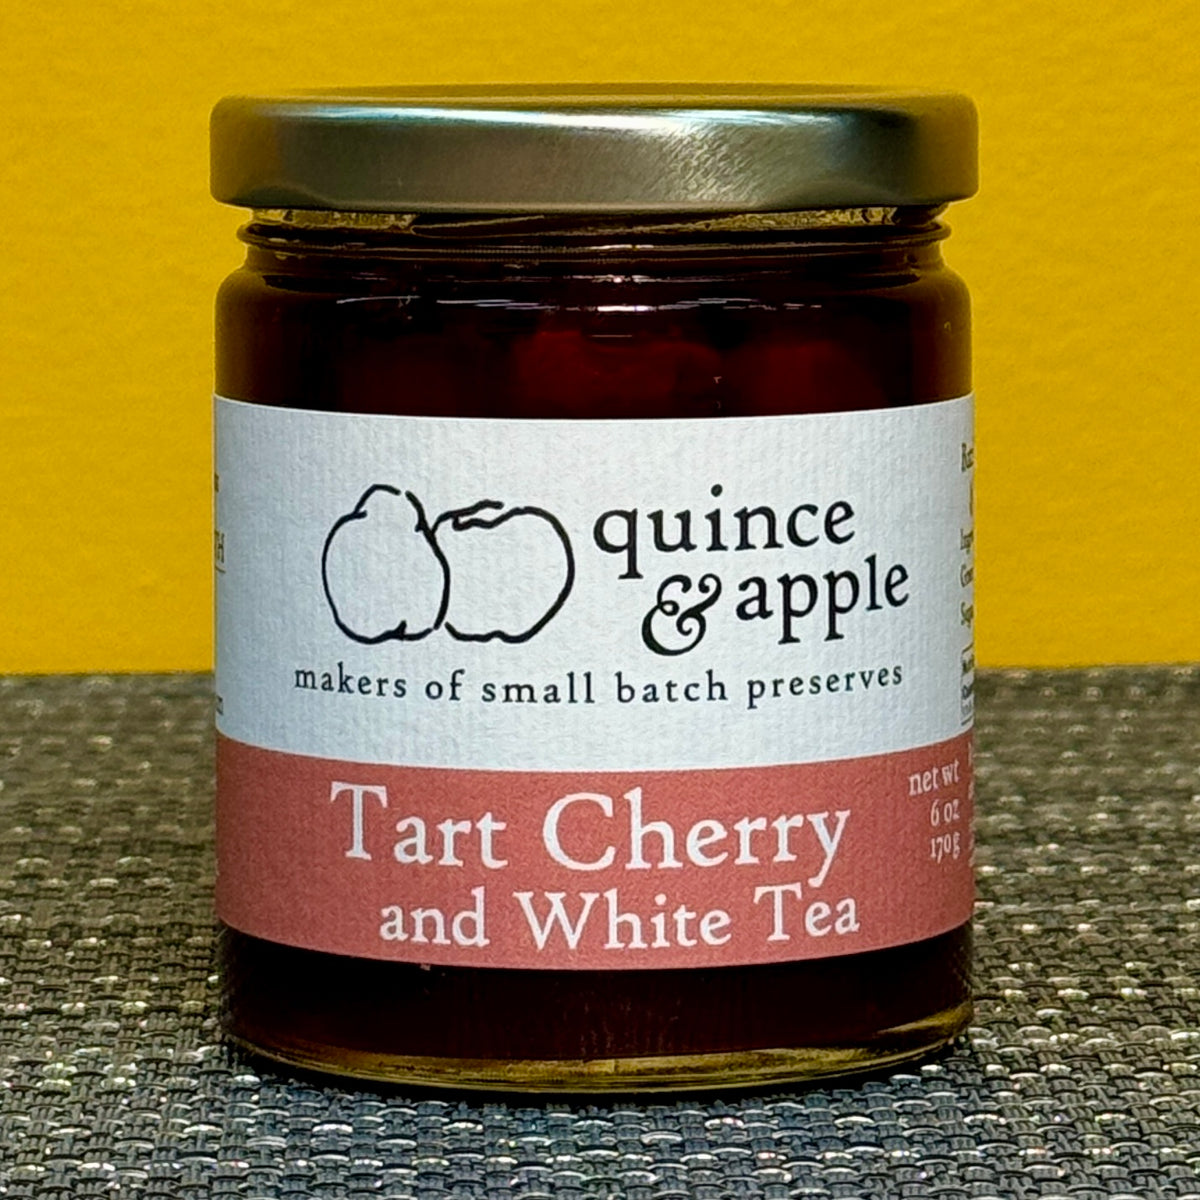 Quince & Apple Tart Cherry and White Tea Preserve